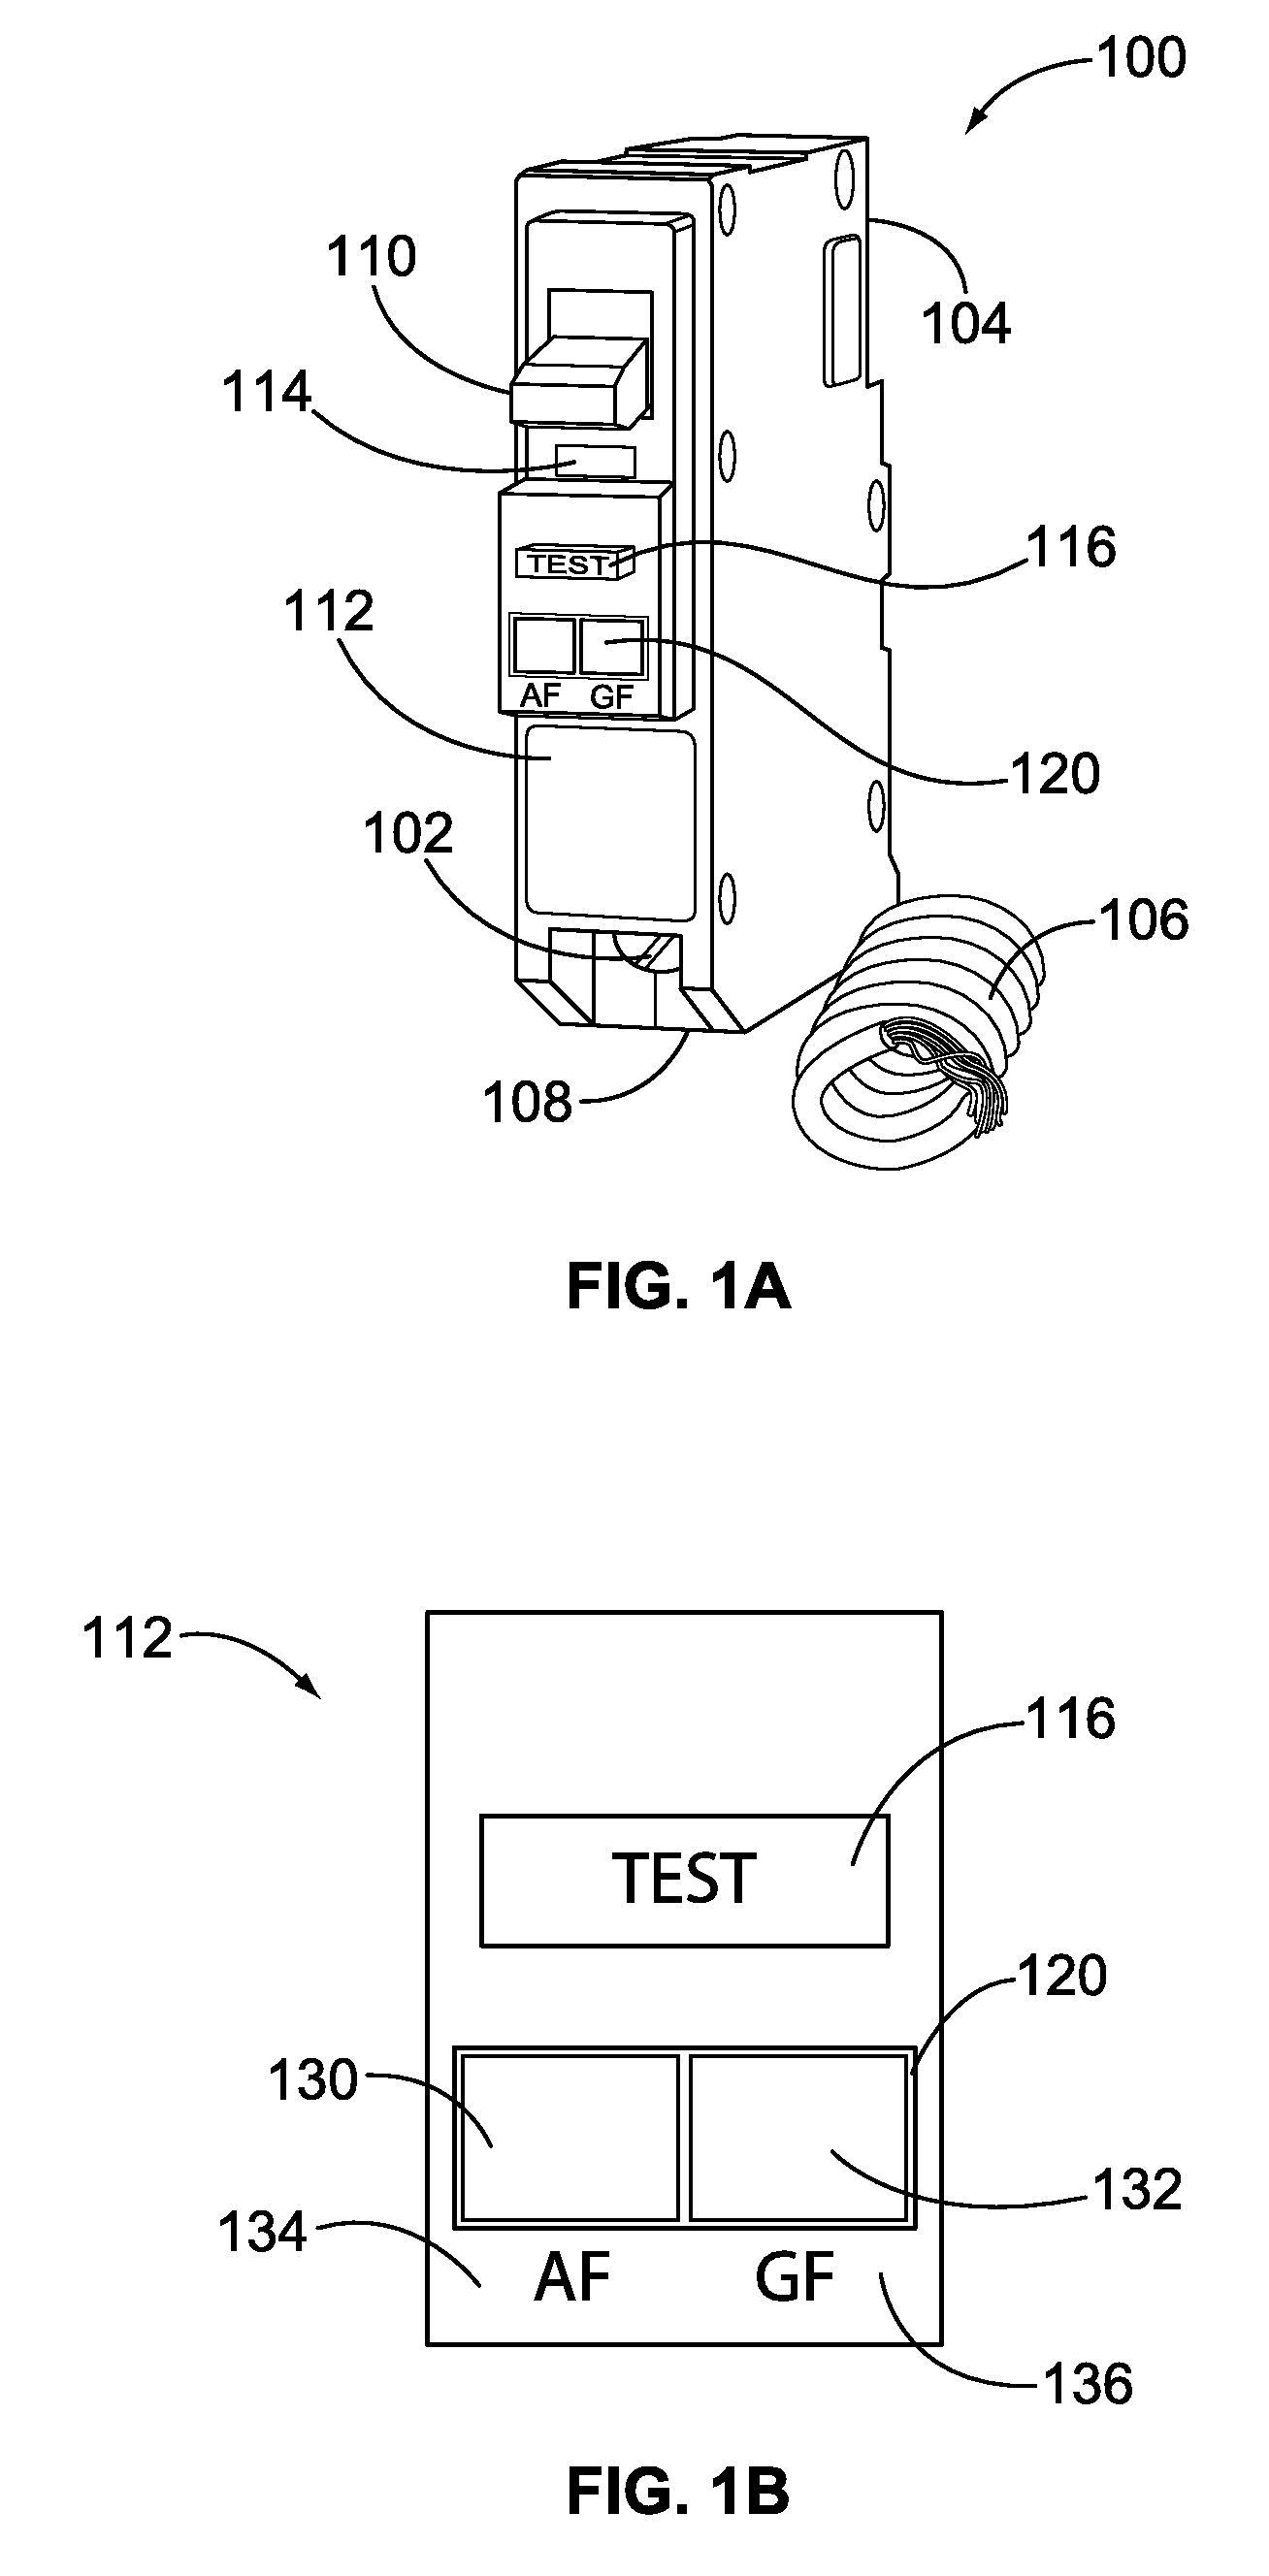 Circuit Breaker With Bistable Display